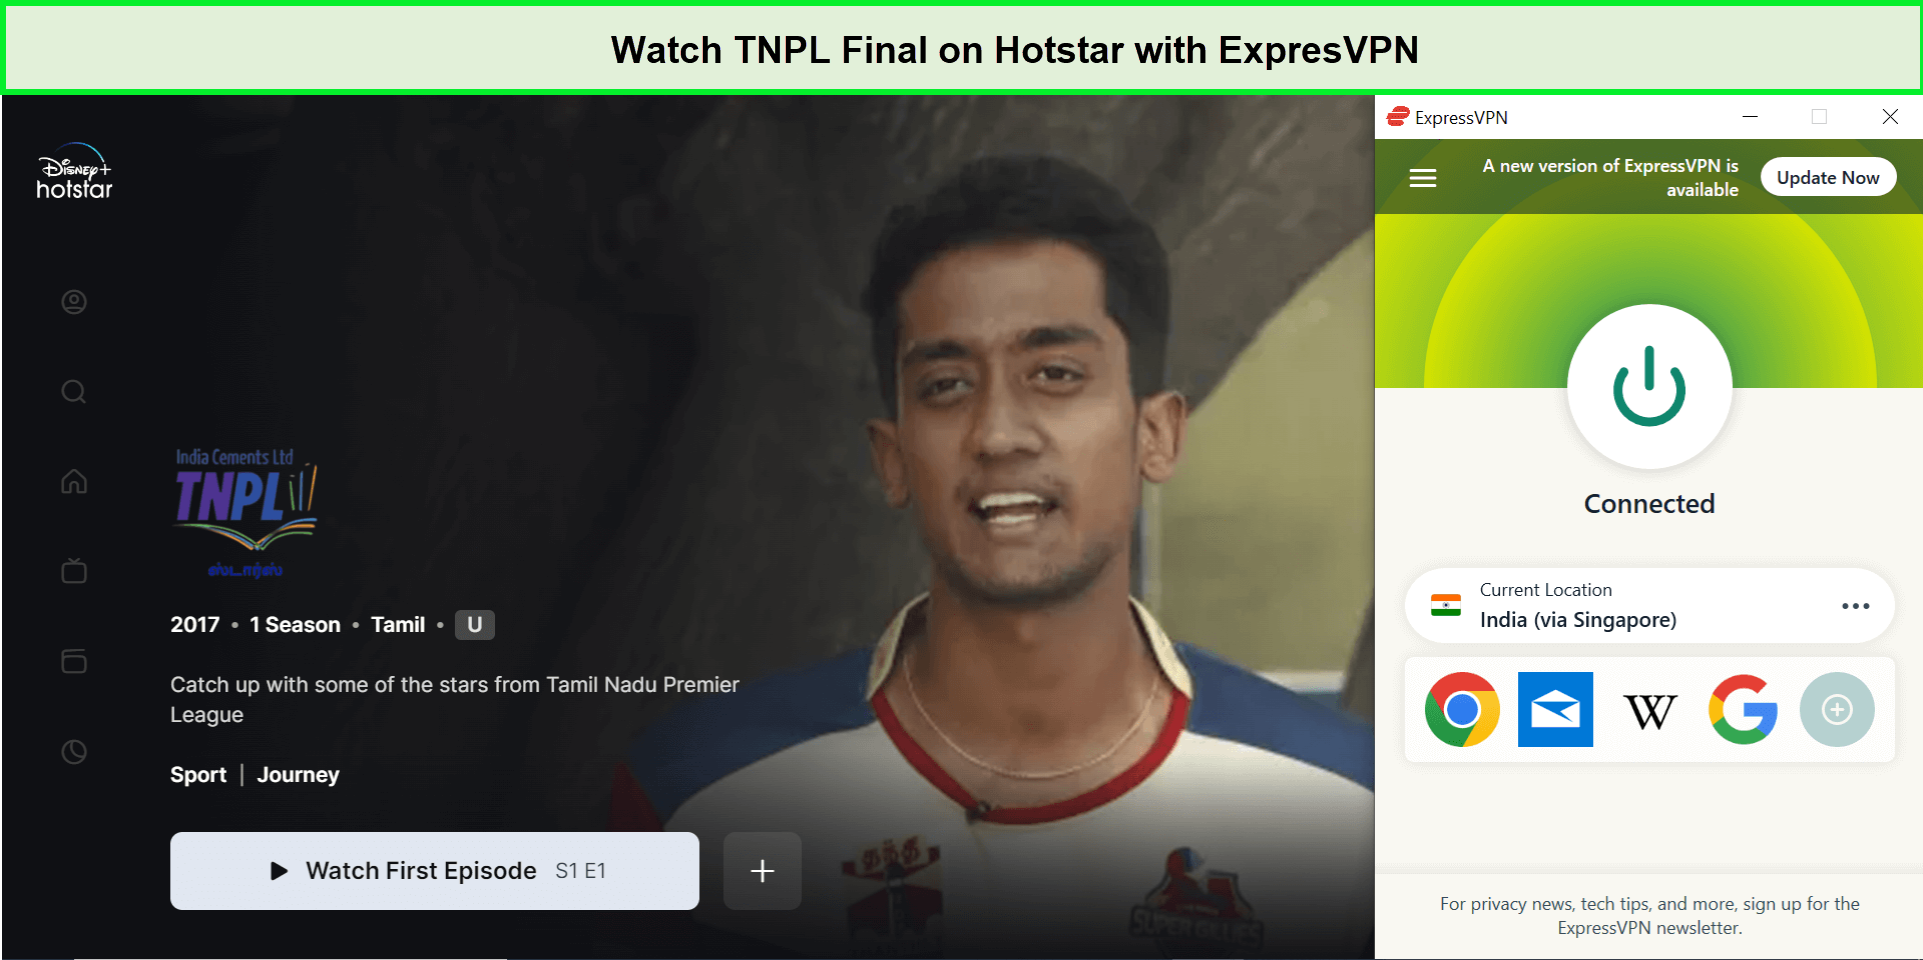 Watch-TNPL-Final-in-Netherlands-on-Hotstar-with-ExpresVPN